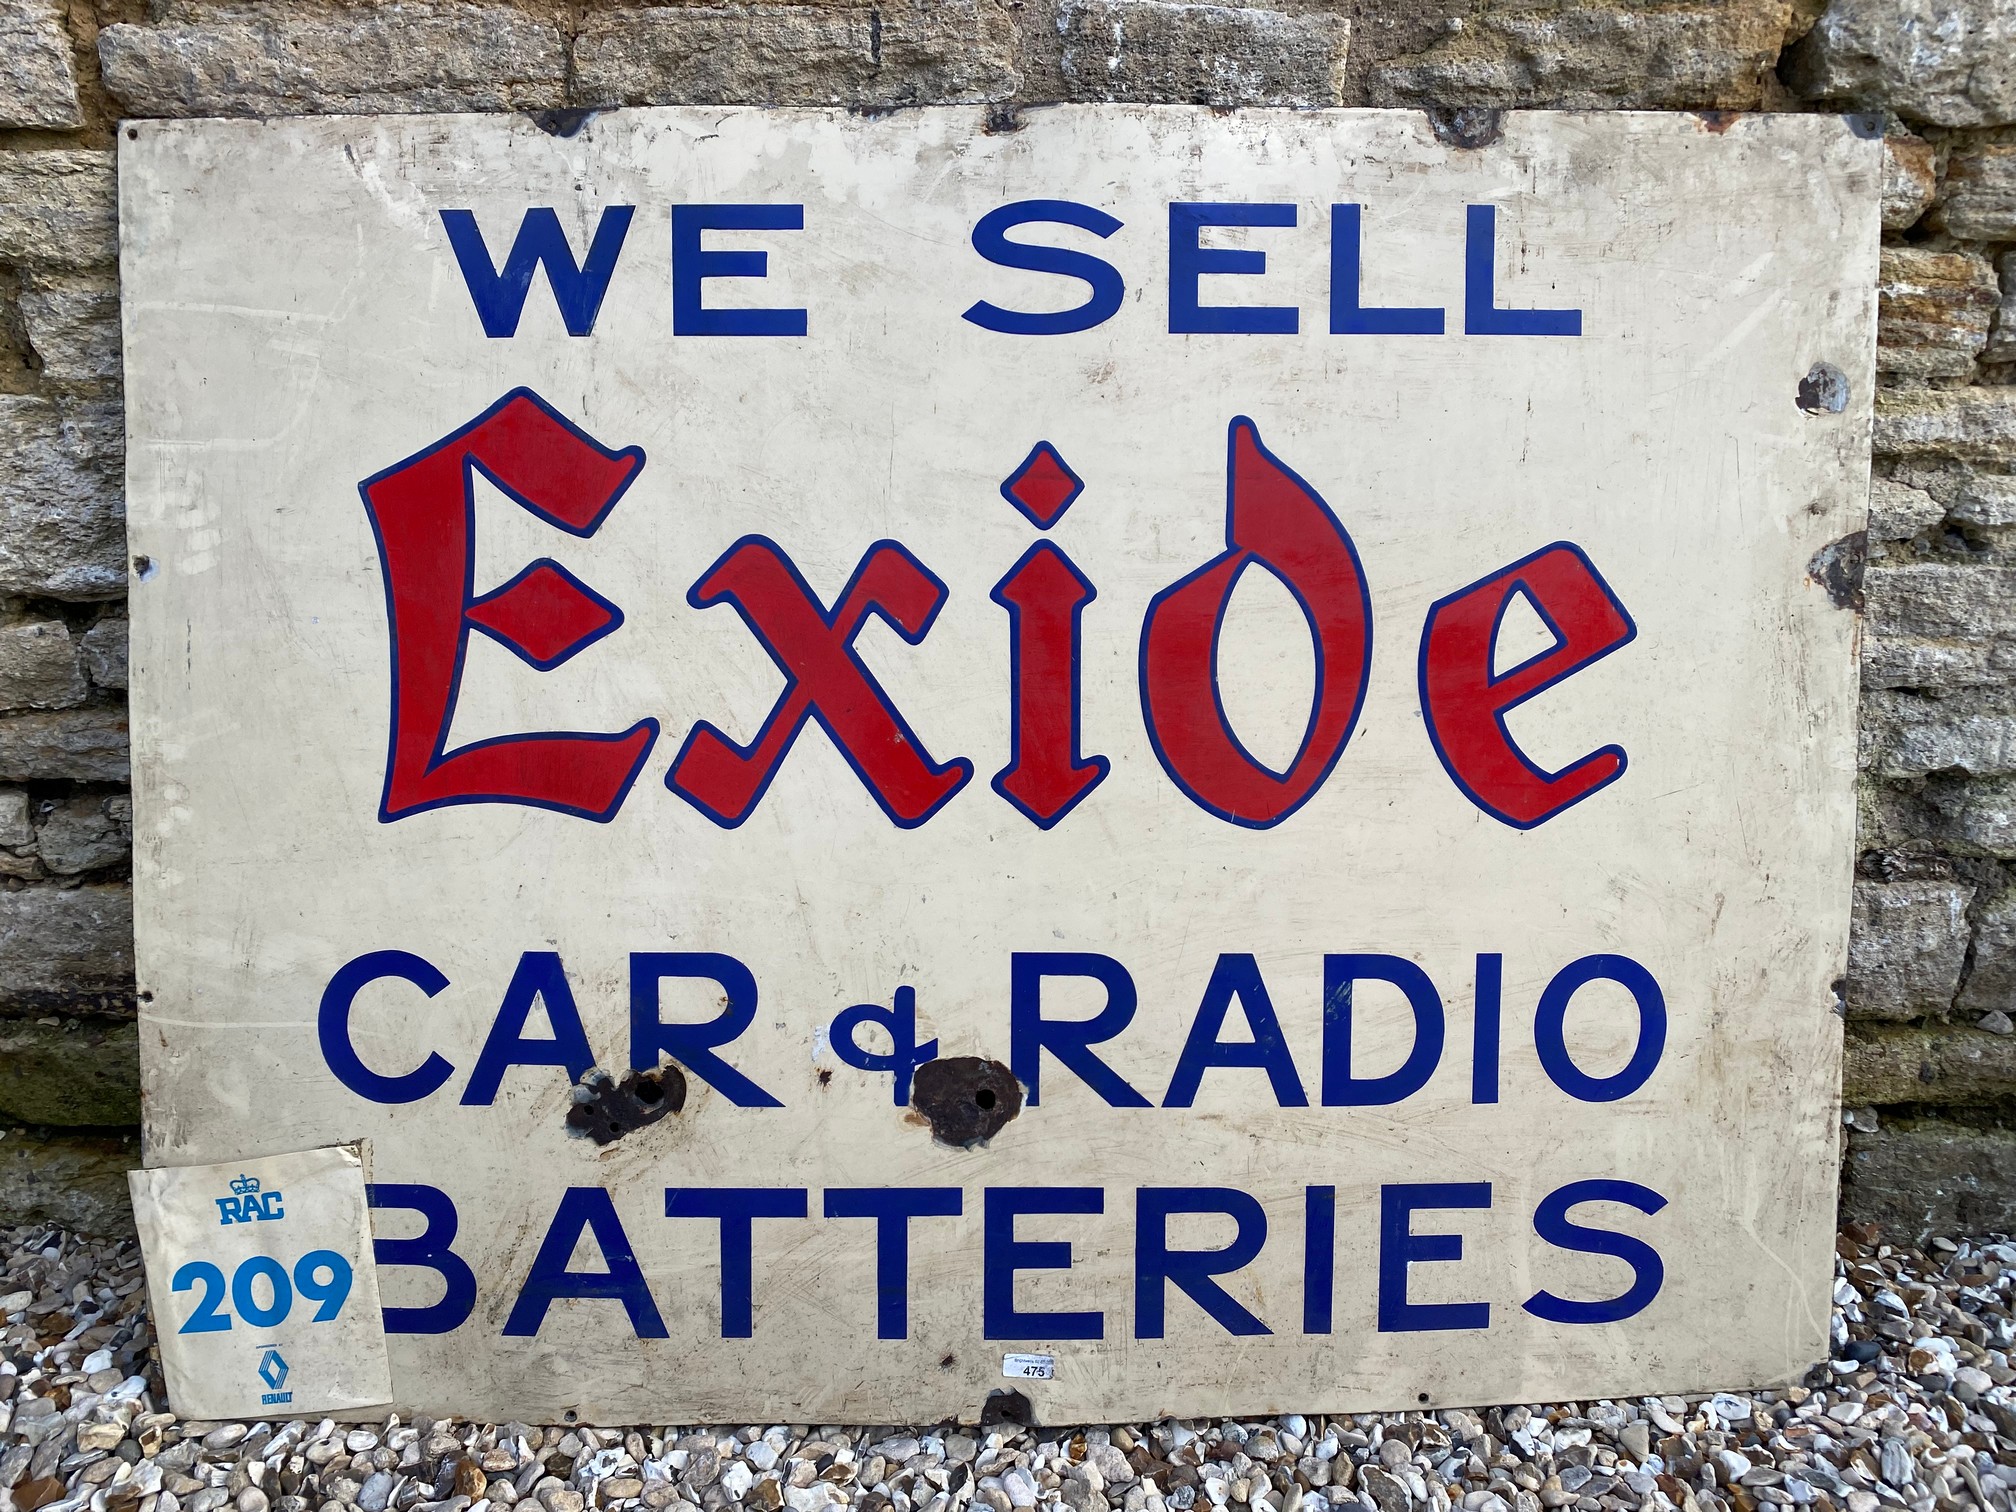 An Exide Car & Radio Batteries rectangular enamel sign, 48 x 36".